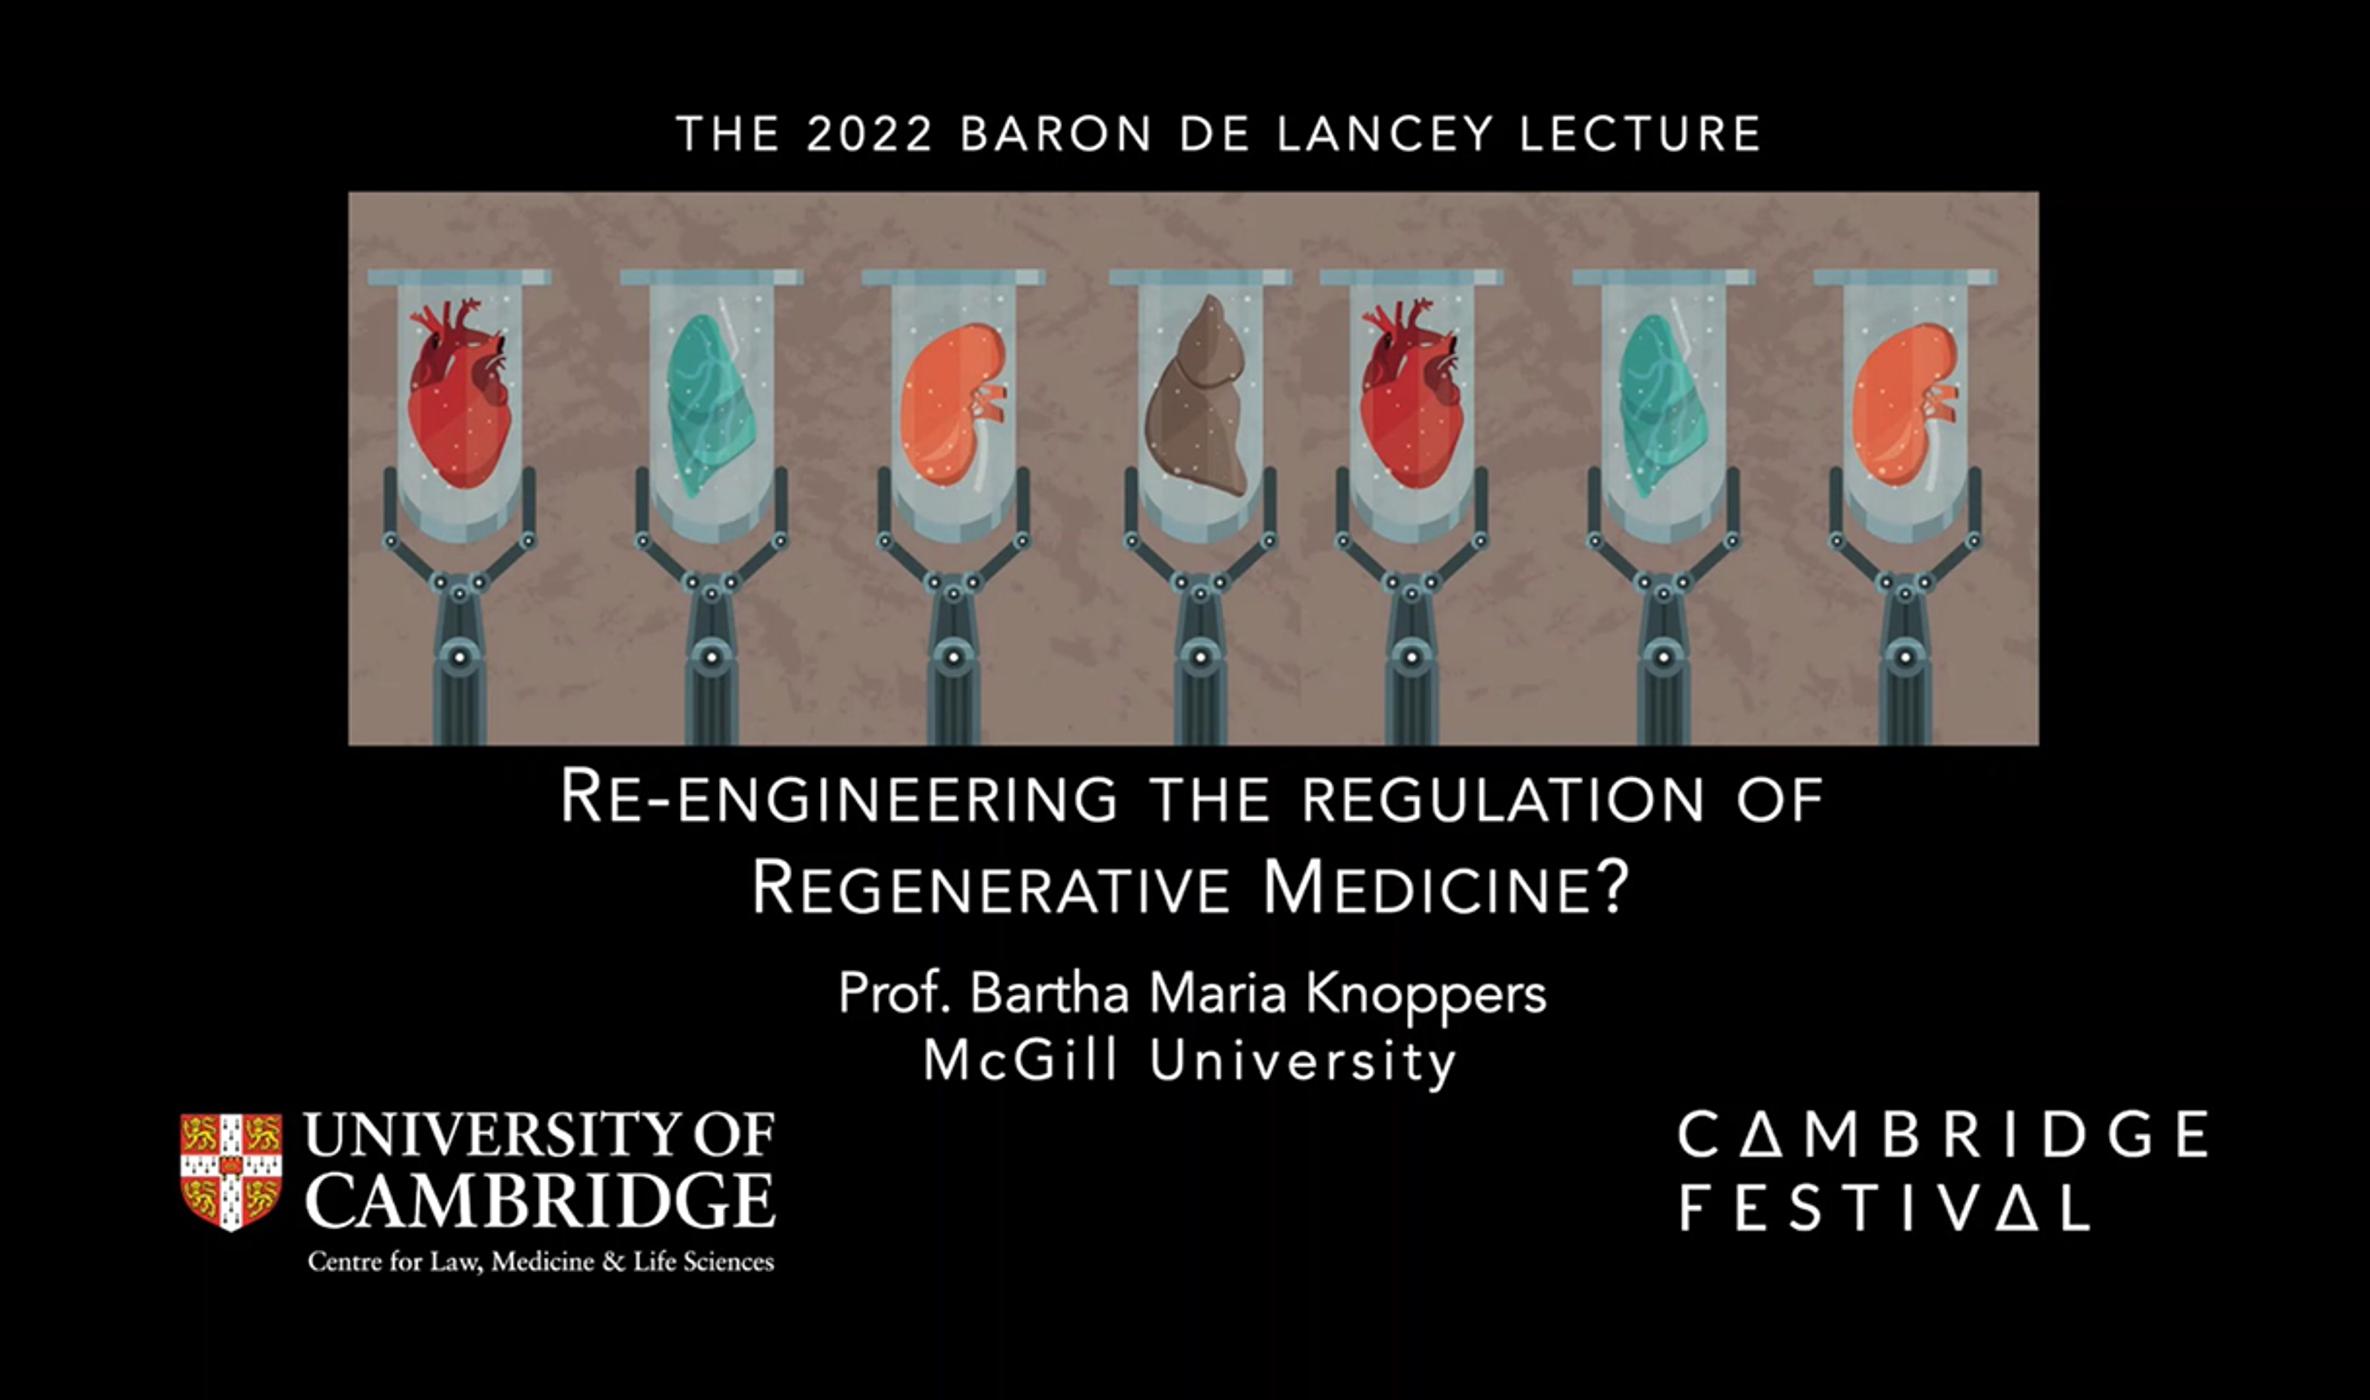 'Re-engineering the Regulation of Regenerative Medicine?': The 2022 Baron de Lancey Lecture